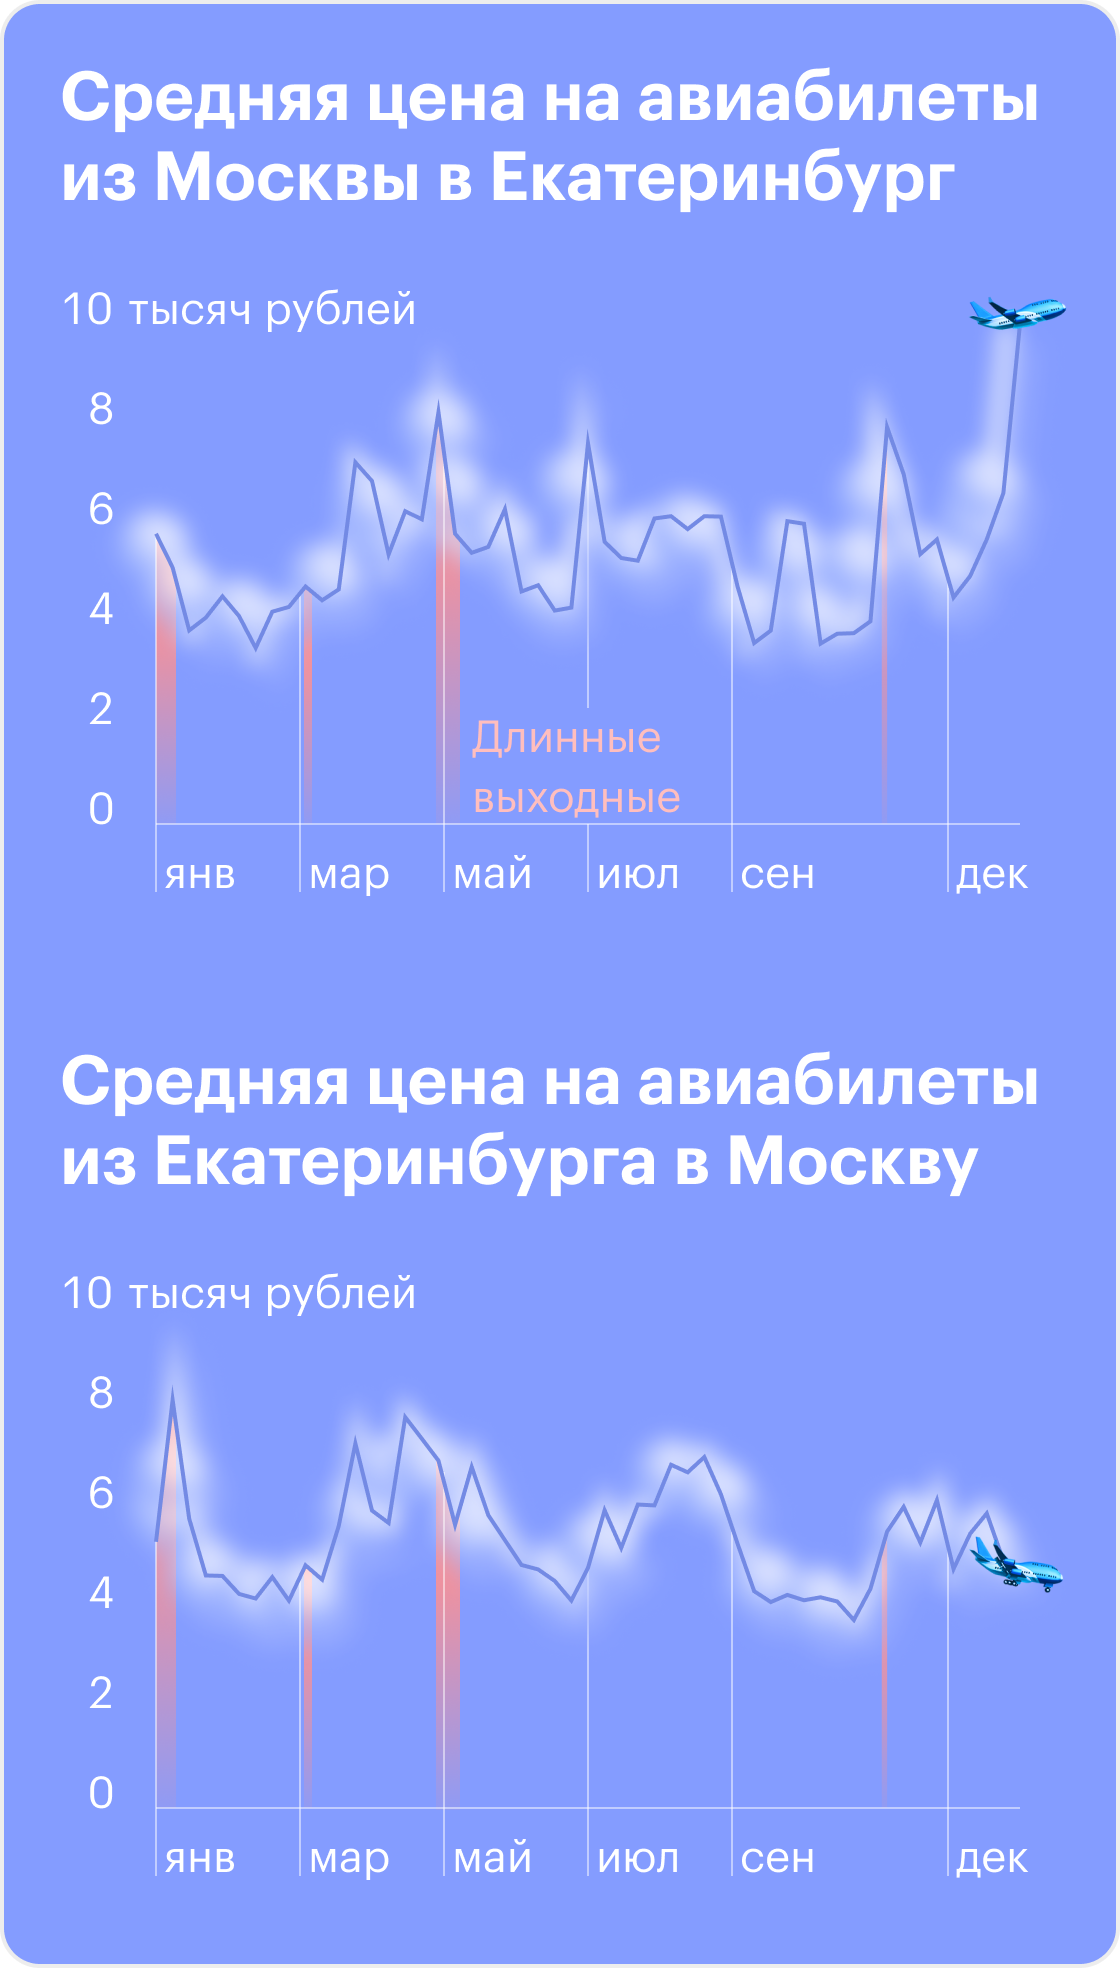 Динамика цен на авиабилеты по маршруту Москва — Екатеринбург и обратно. Источник: Tinkoff Data, расчеты Т—Ж